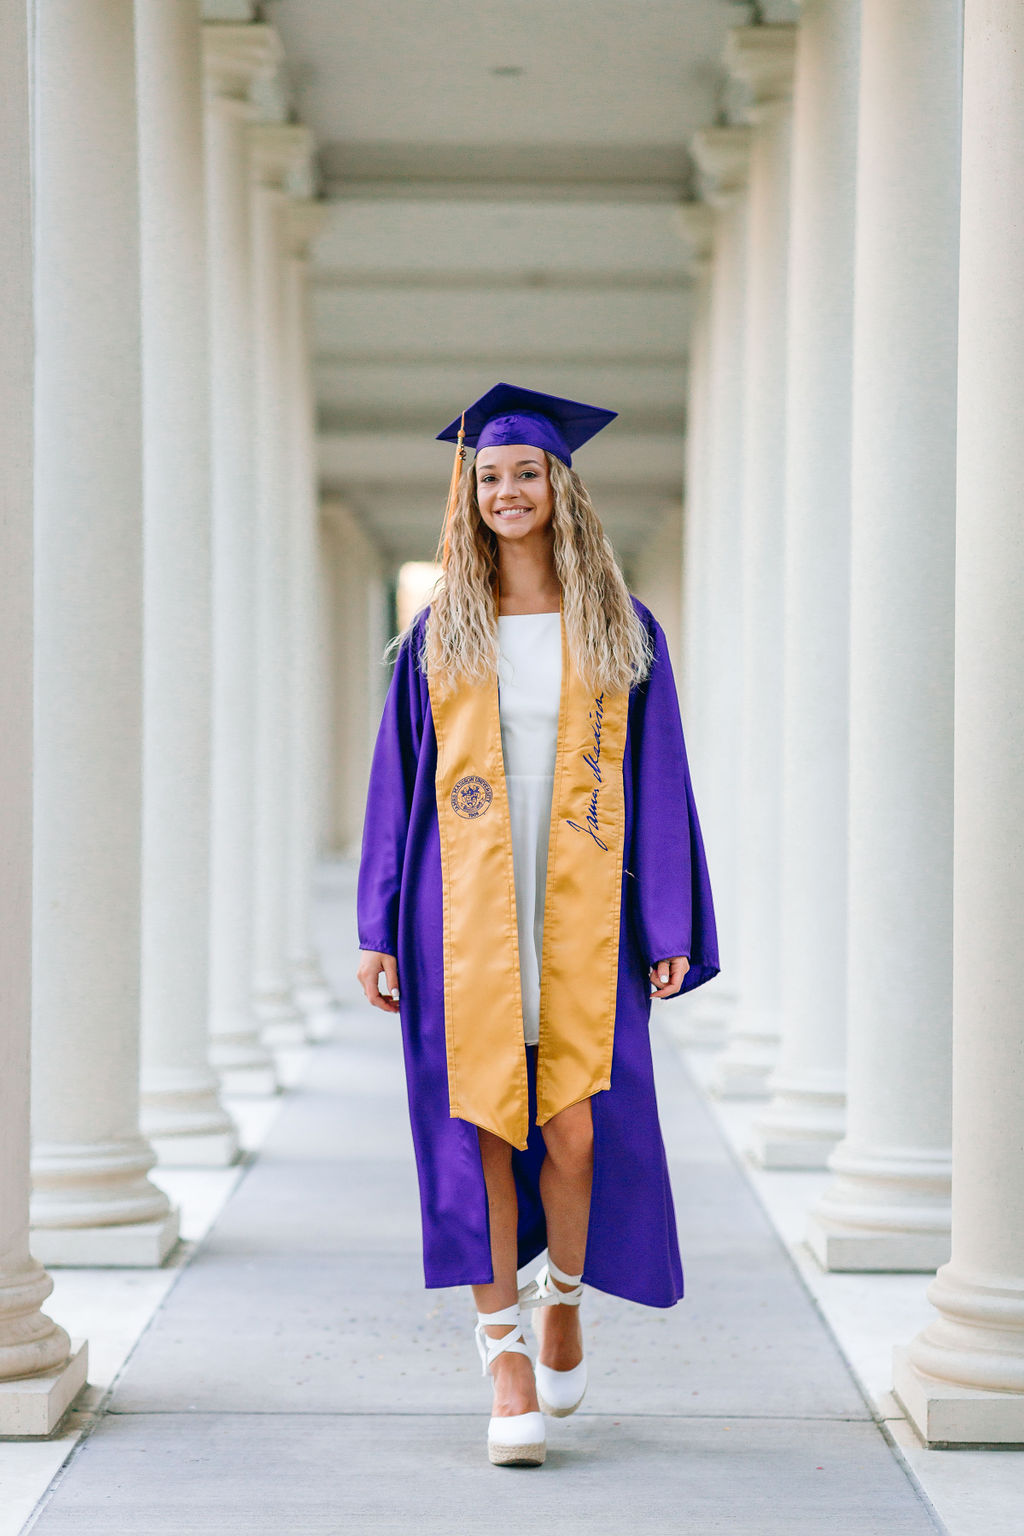 A college graduate walks through a covered path in a purple and gold cap and gown before starting a jmu graduate program